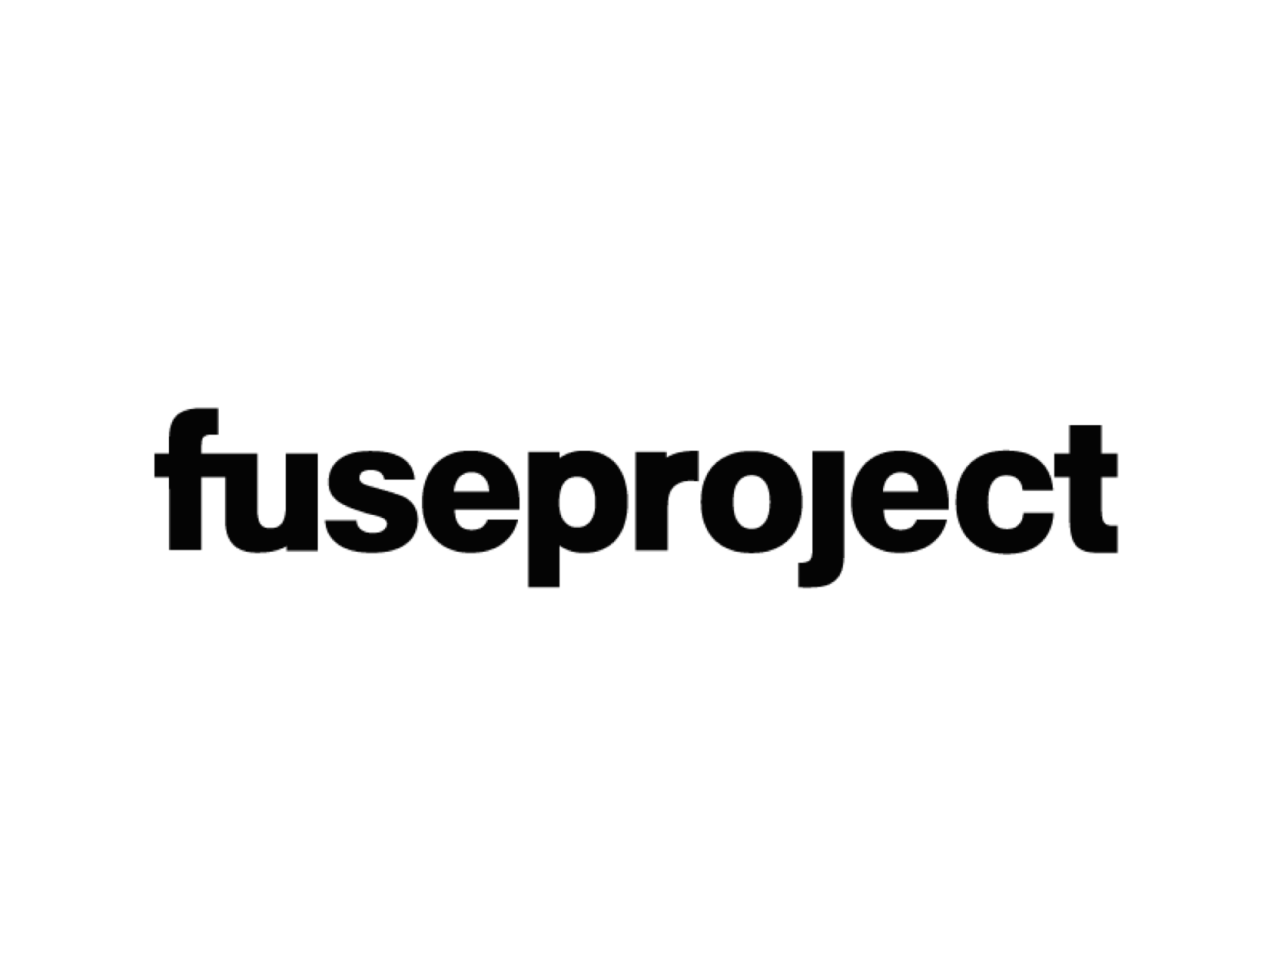 Fuseproject